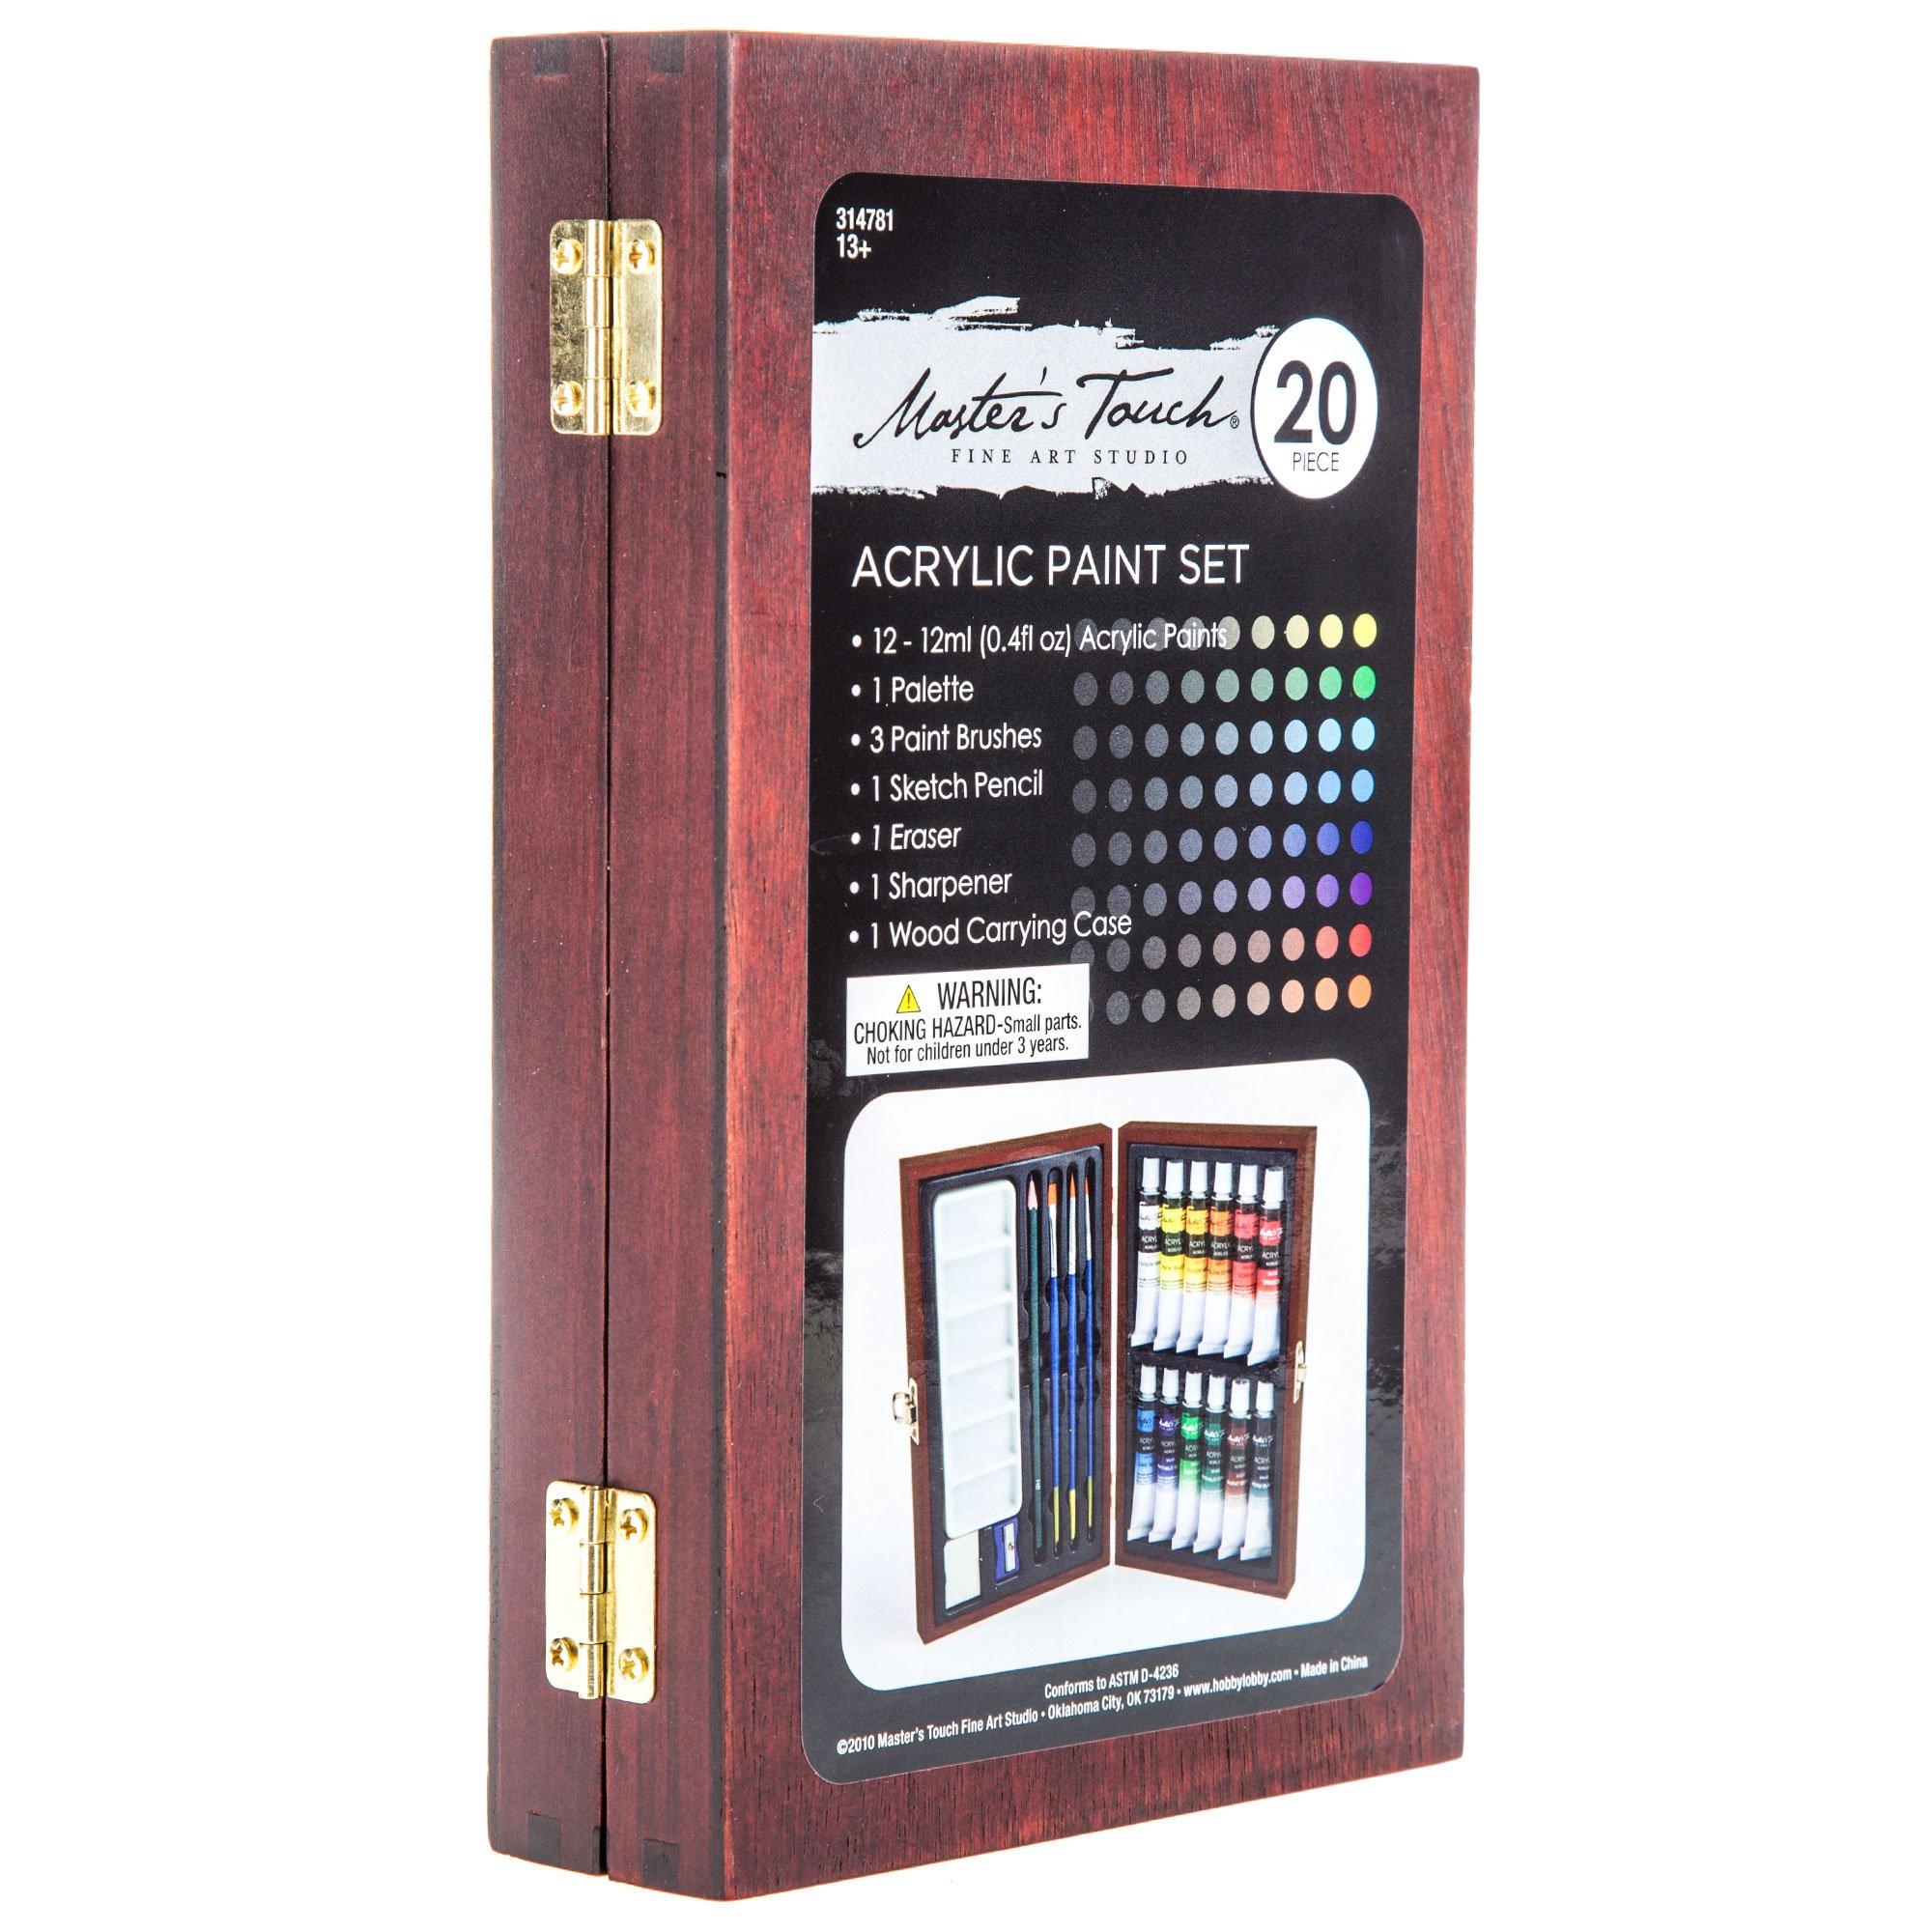 Master's Touch Acrylic Paint, Hobby Lobby, 313577